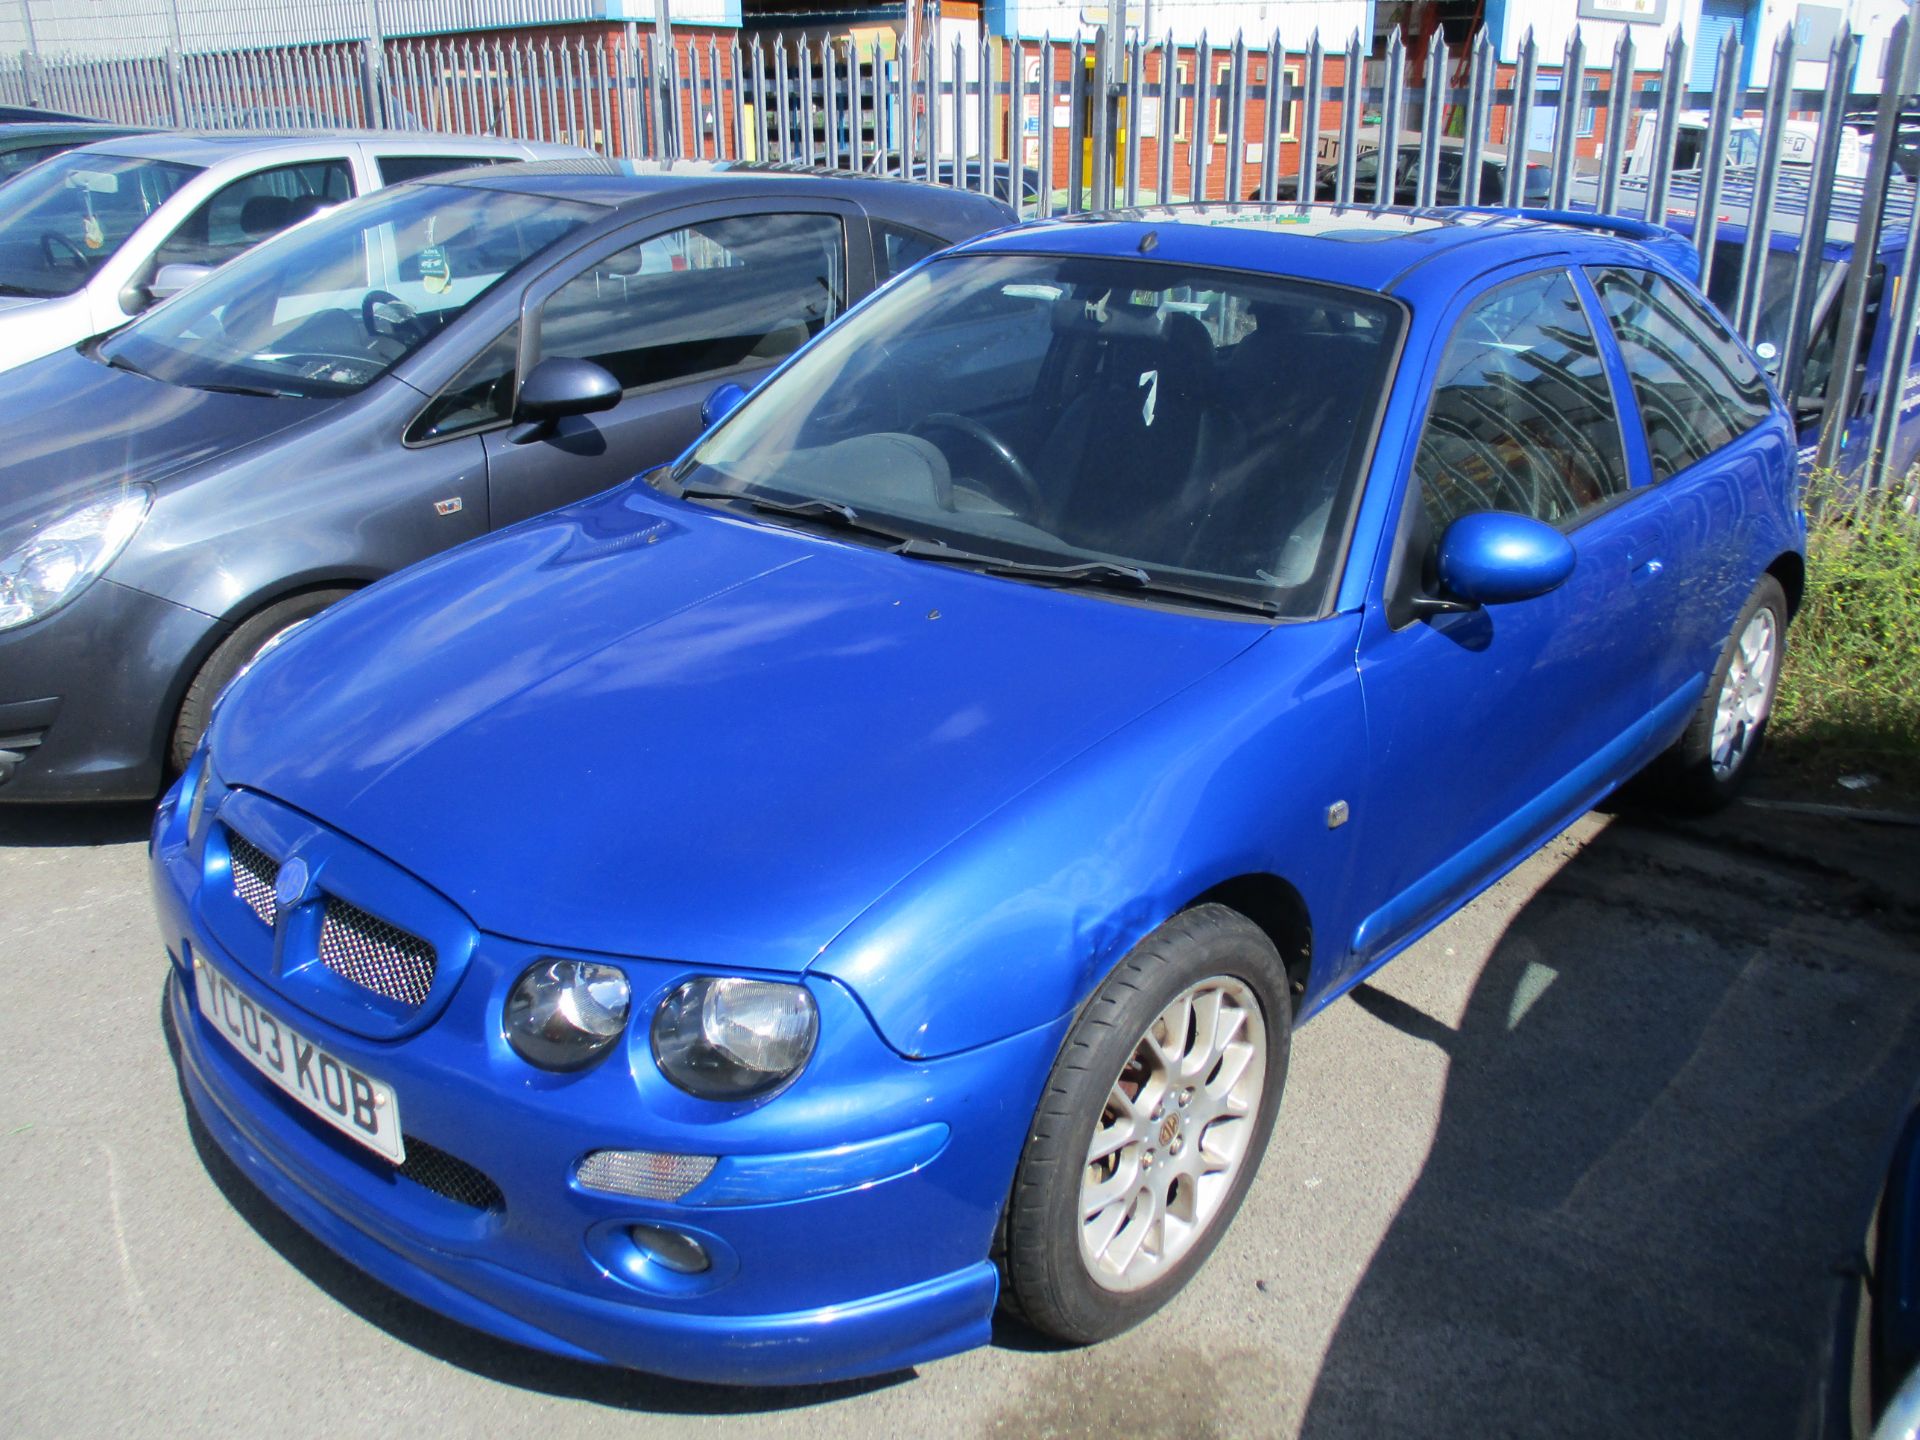 MG ZR+ 1.4L 3 DOOR HATCHBACK - petrol - blue Reg No YC03 KOB Rec Mil 69,392+as at 7.5.